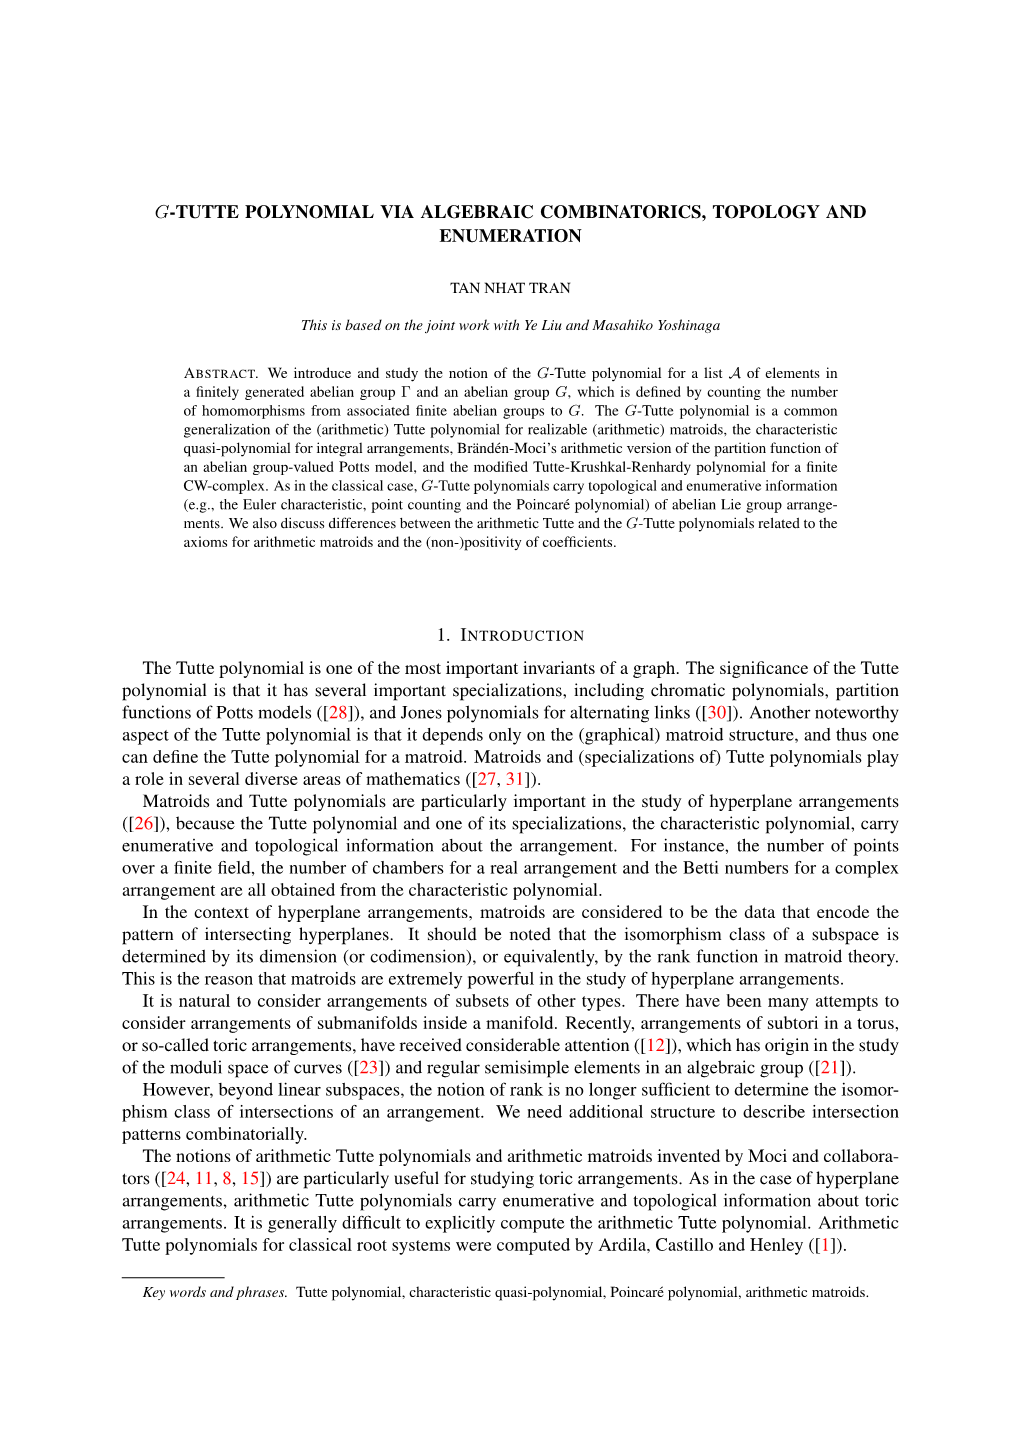 G-Tutte Polynomial Via Algebraic Combinatorics, Topology and Enumeration